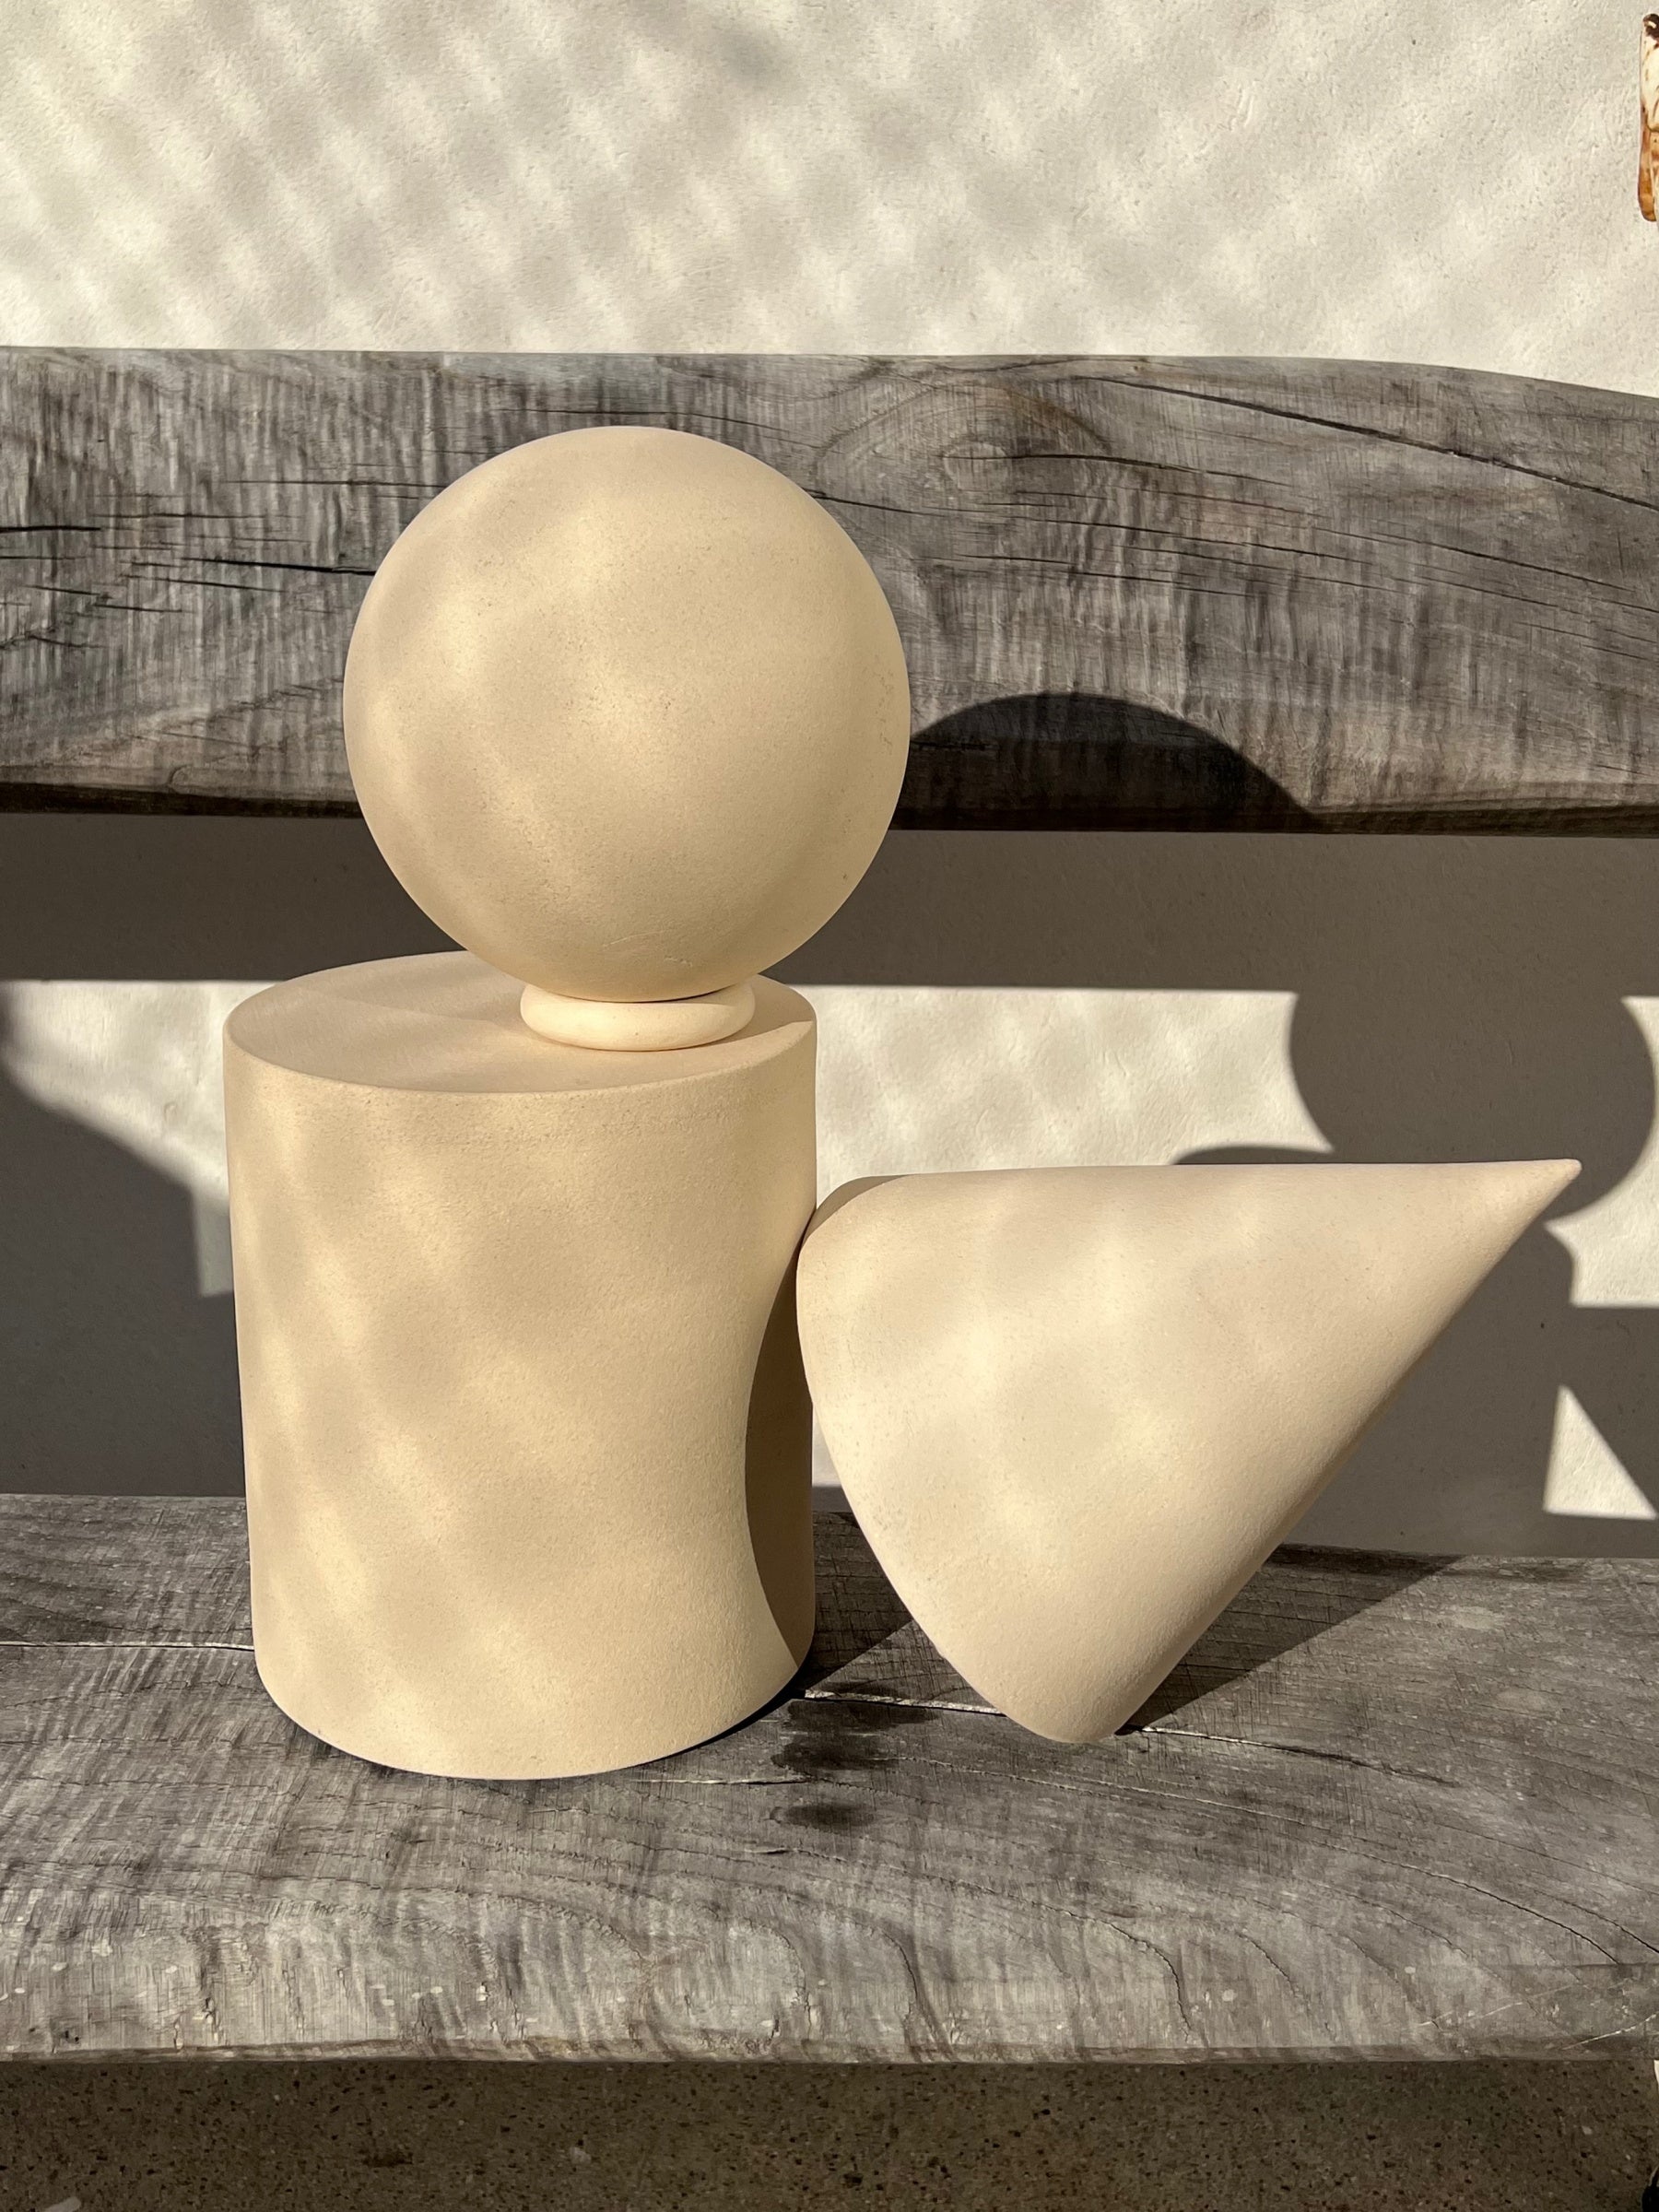 Glazed Geometric Decoration Set Ceramic, White Porcelain, Sculptural Object 'Cubism'